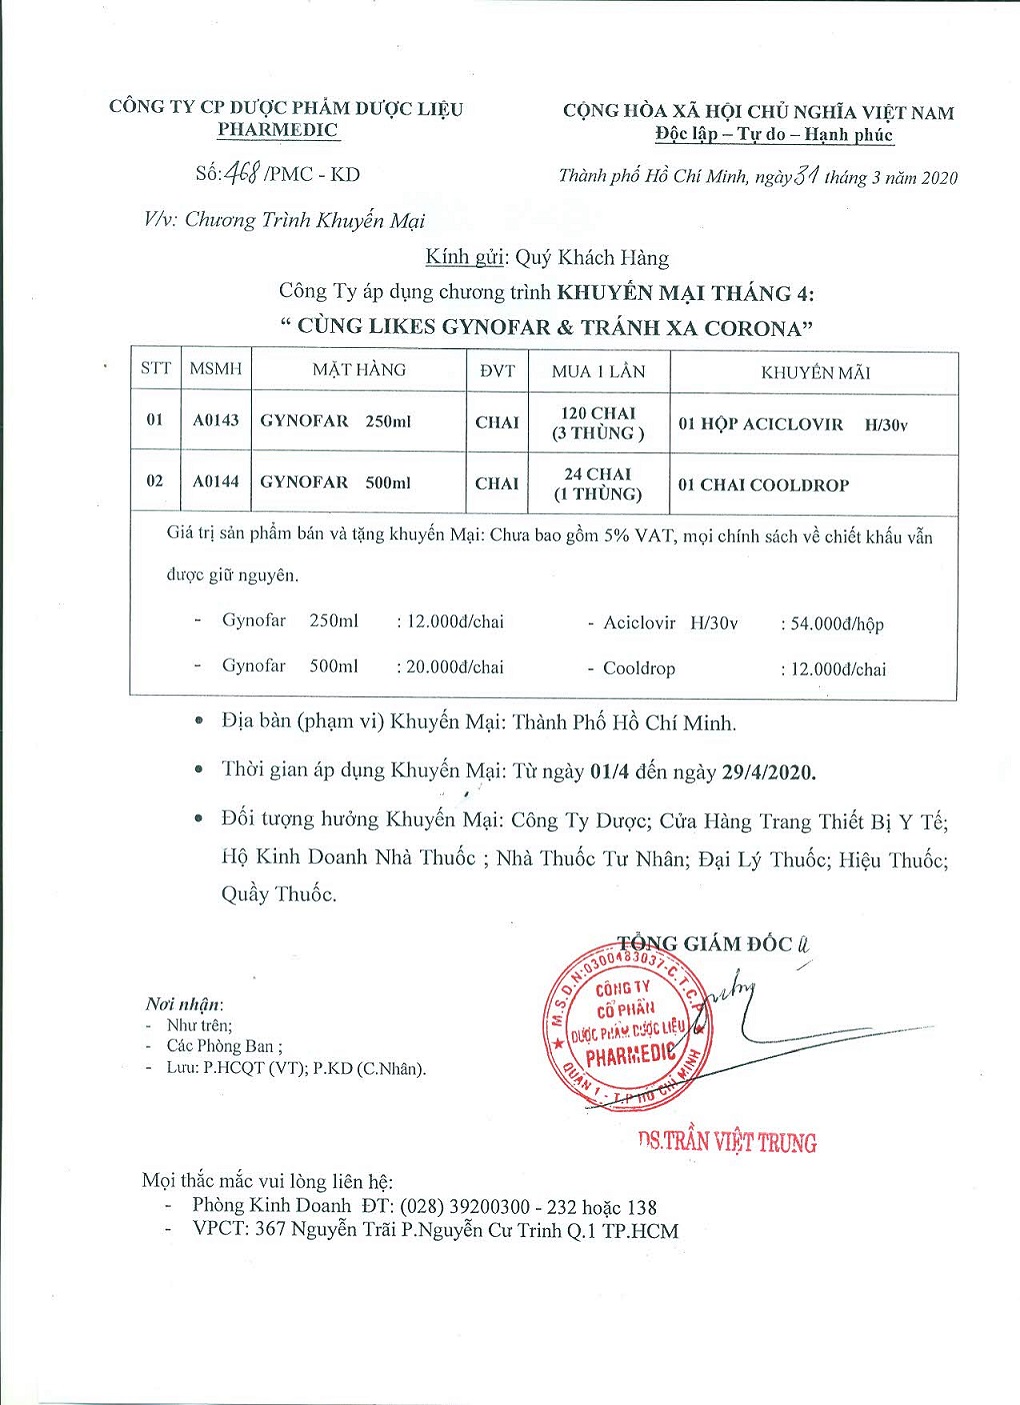 TB_CHUONG_TRINH_KHUYEN_MAI_THANG_042020_001